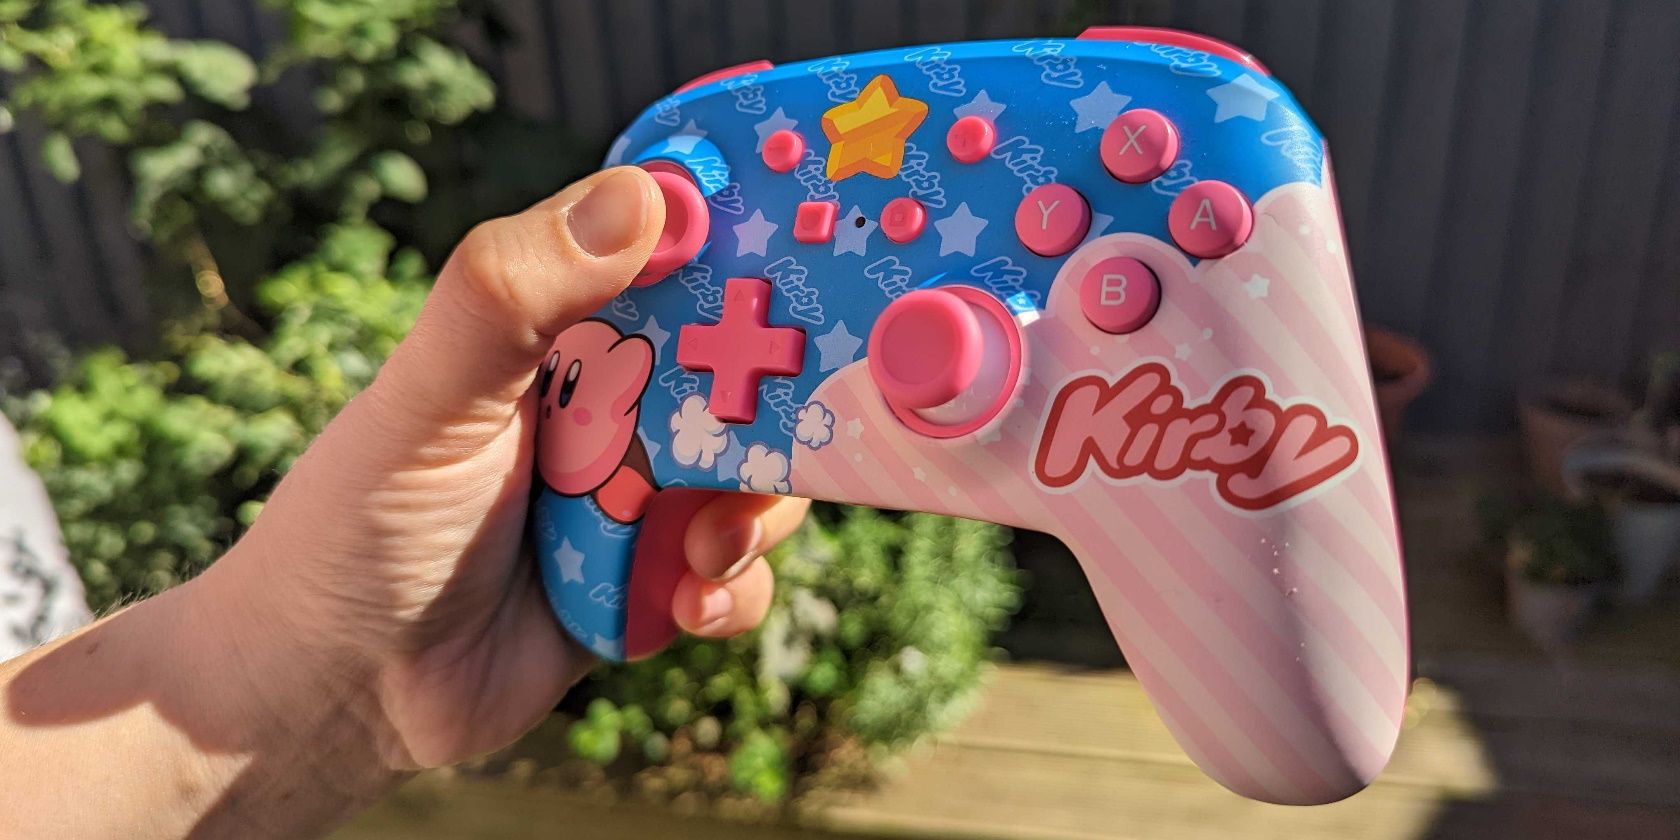 Powera Kirby Nintendo Switch Gamepad Pink